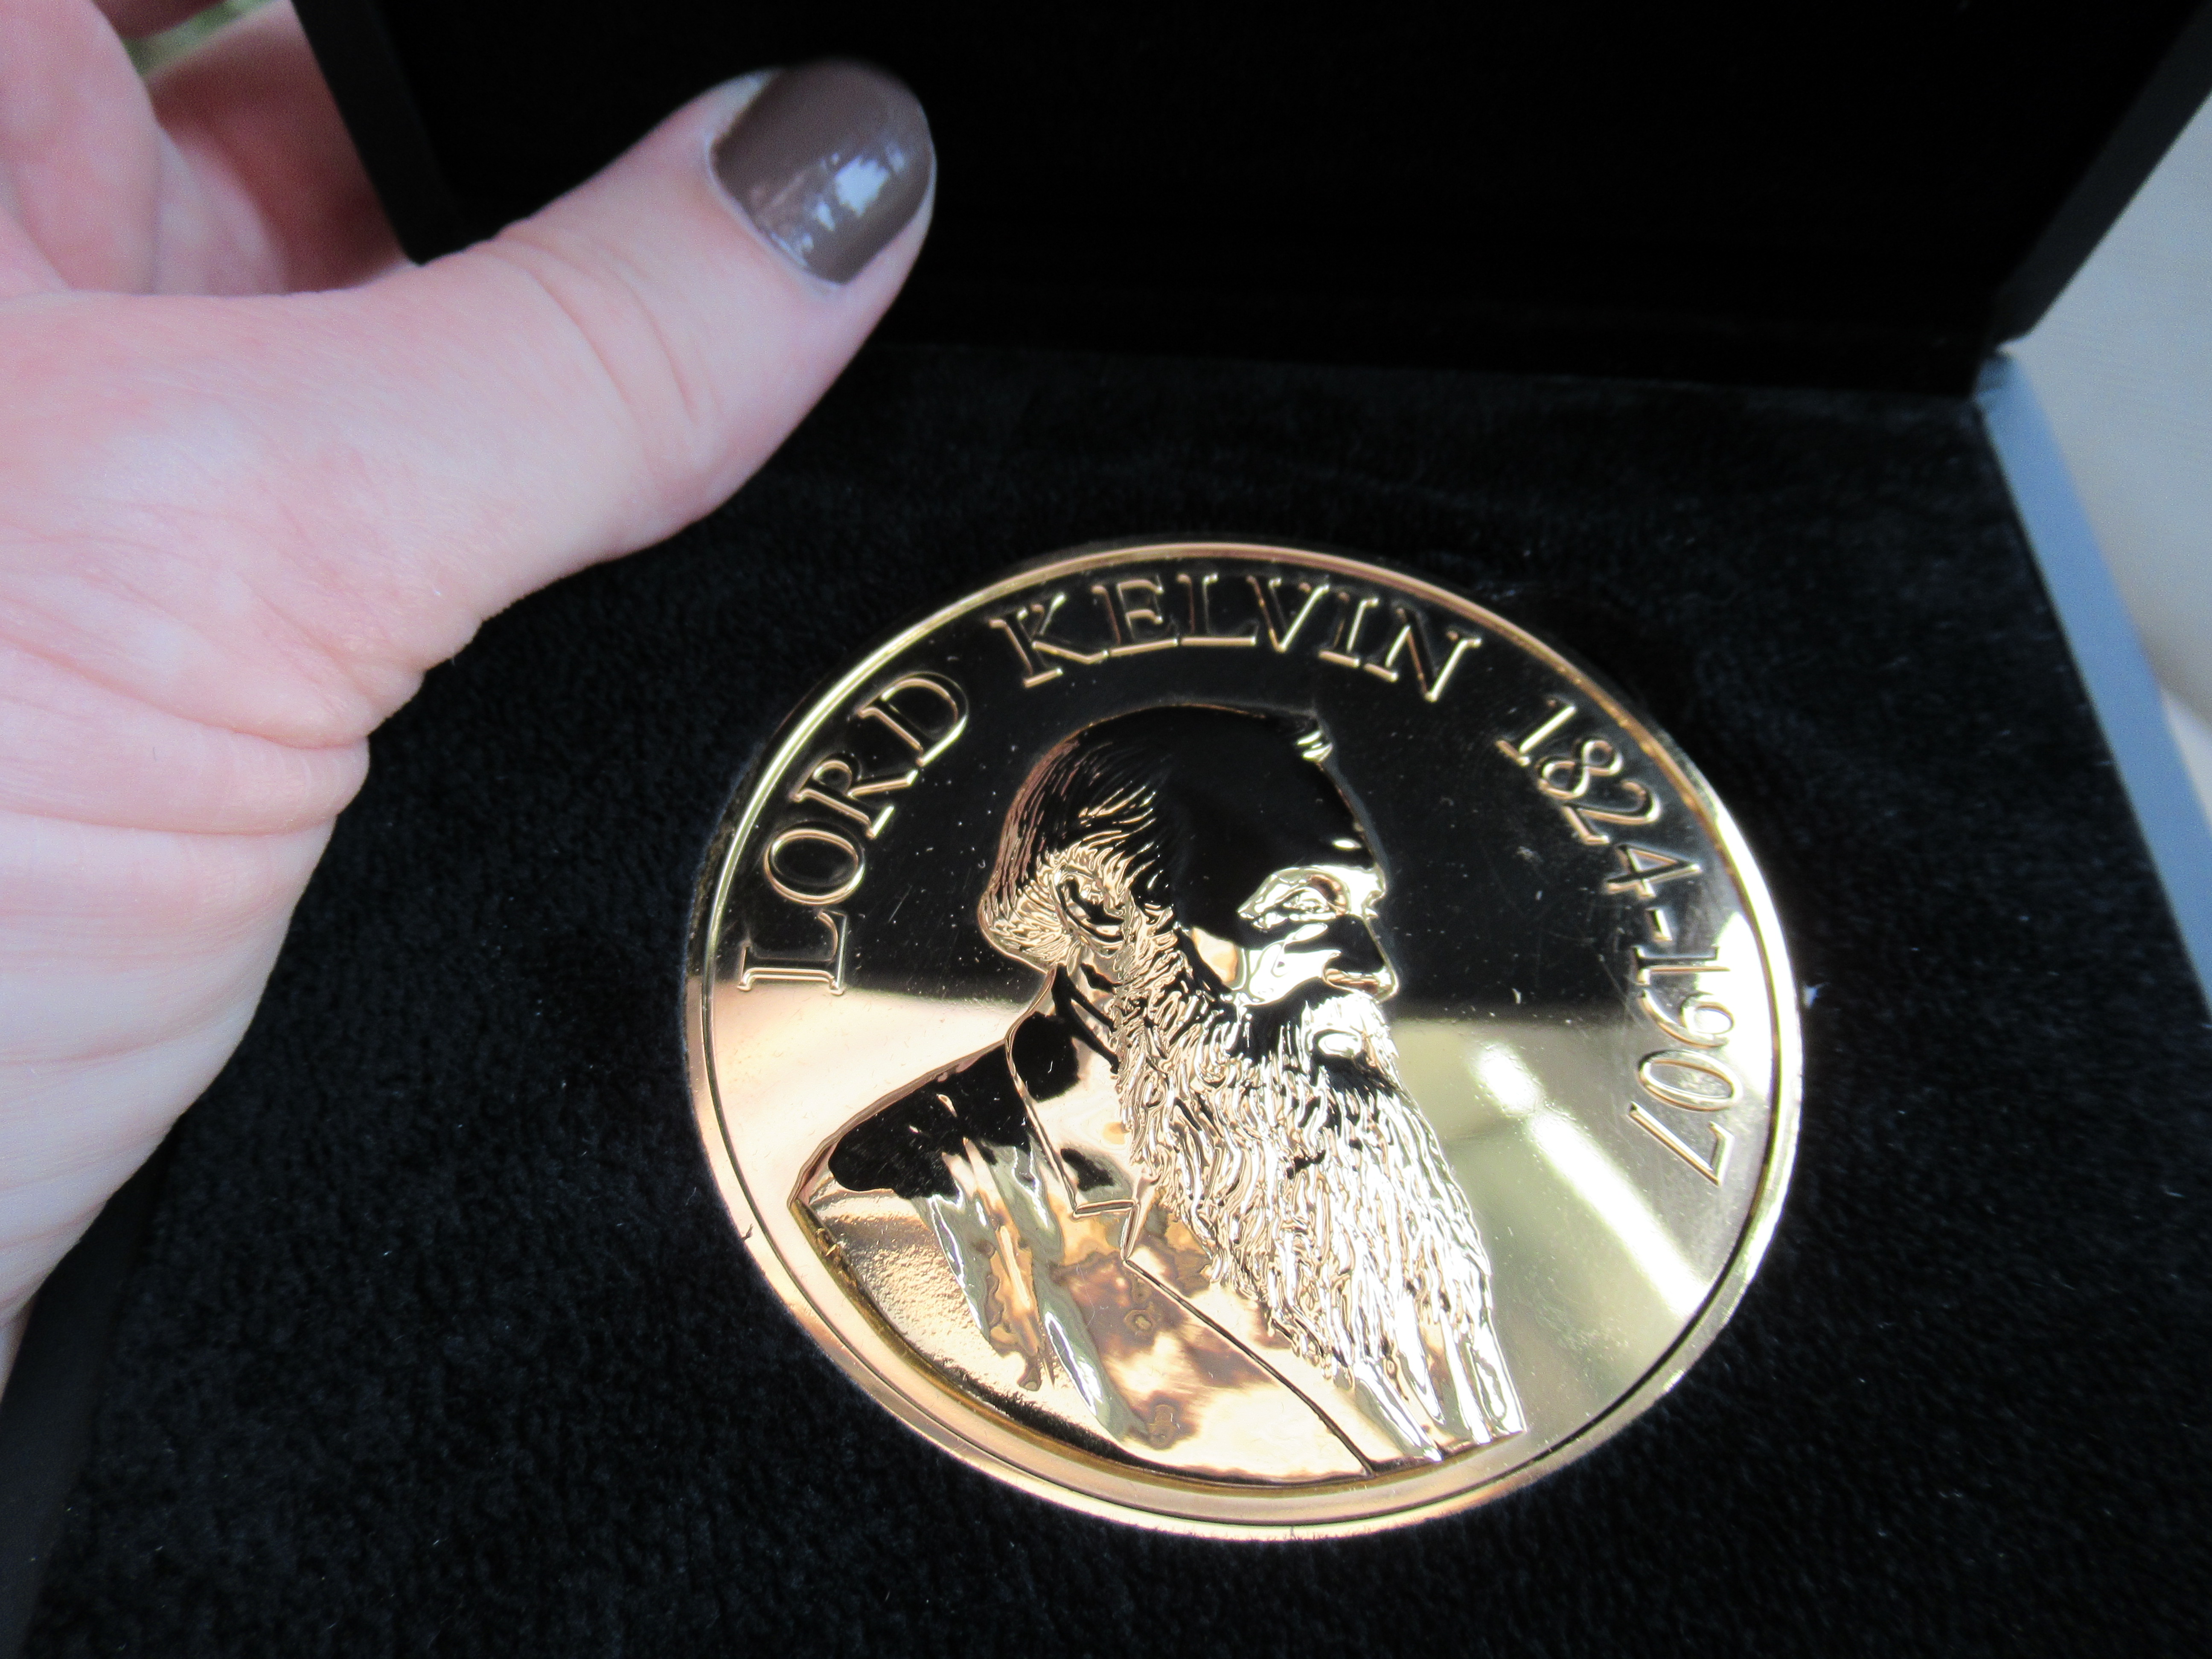 Sharon Ann holding the Lord Kelvin medal